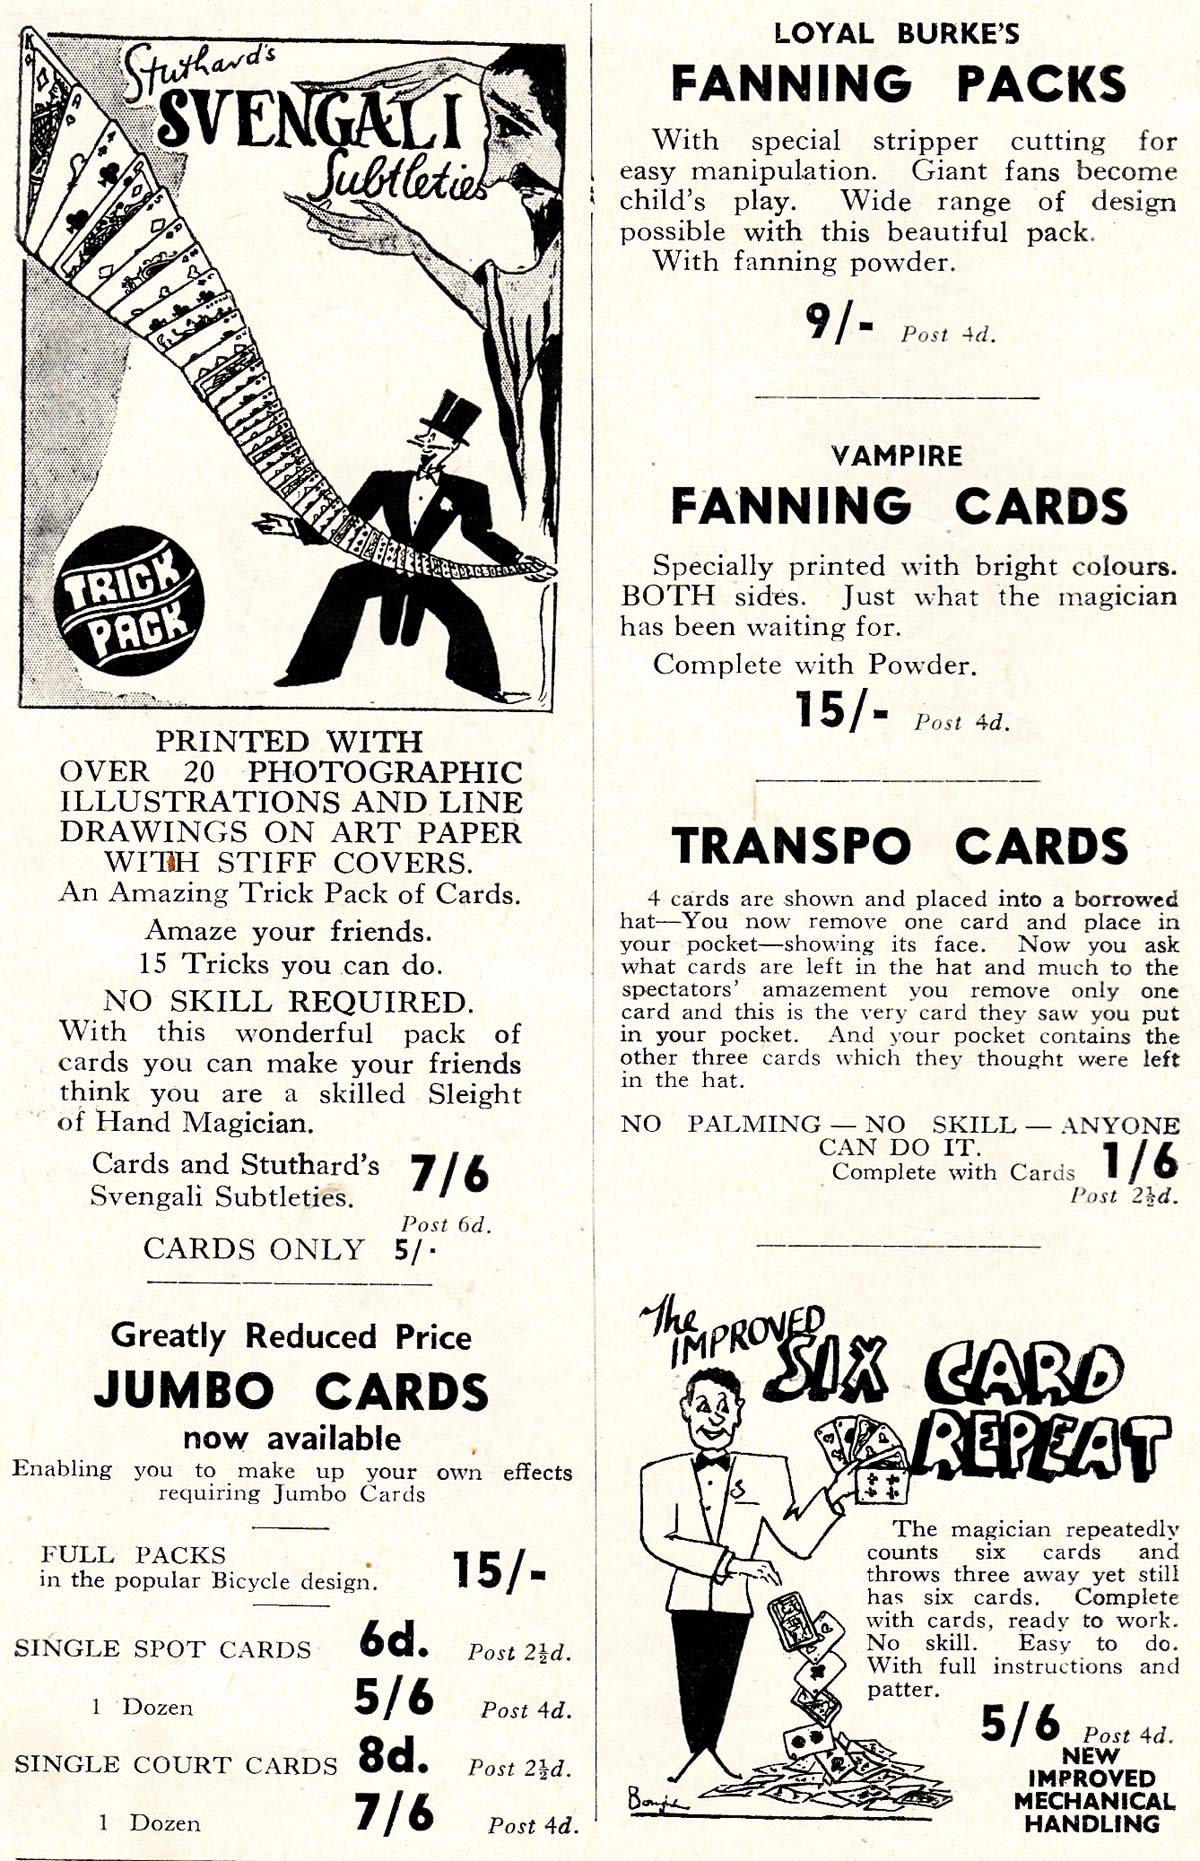 Gamagic Catalogue of Magic Card Tricks, c.1940